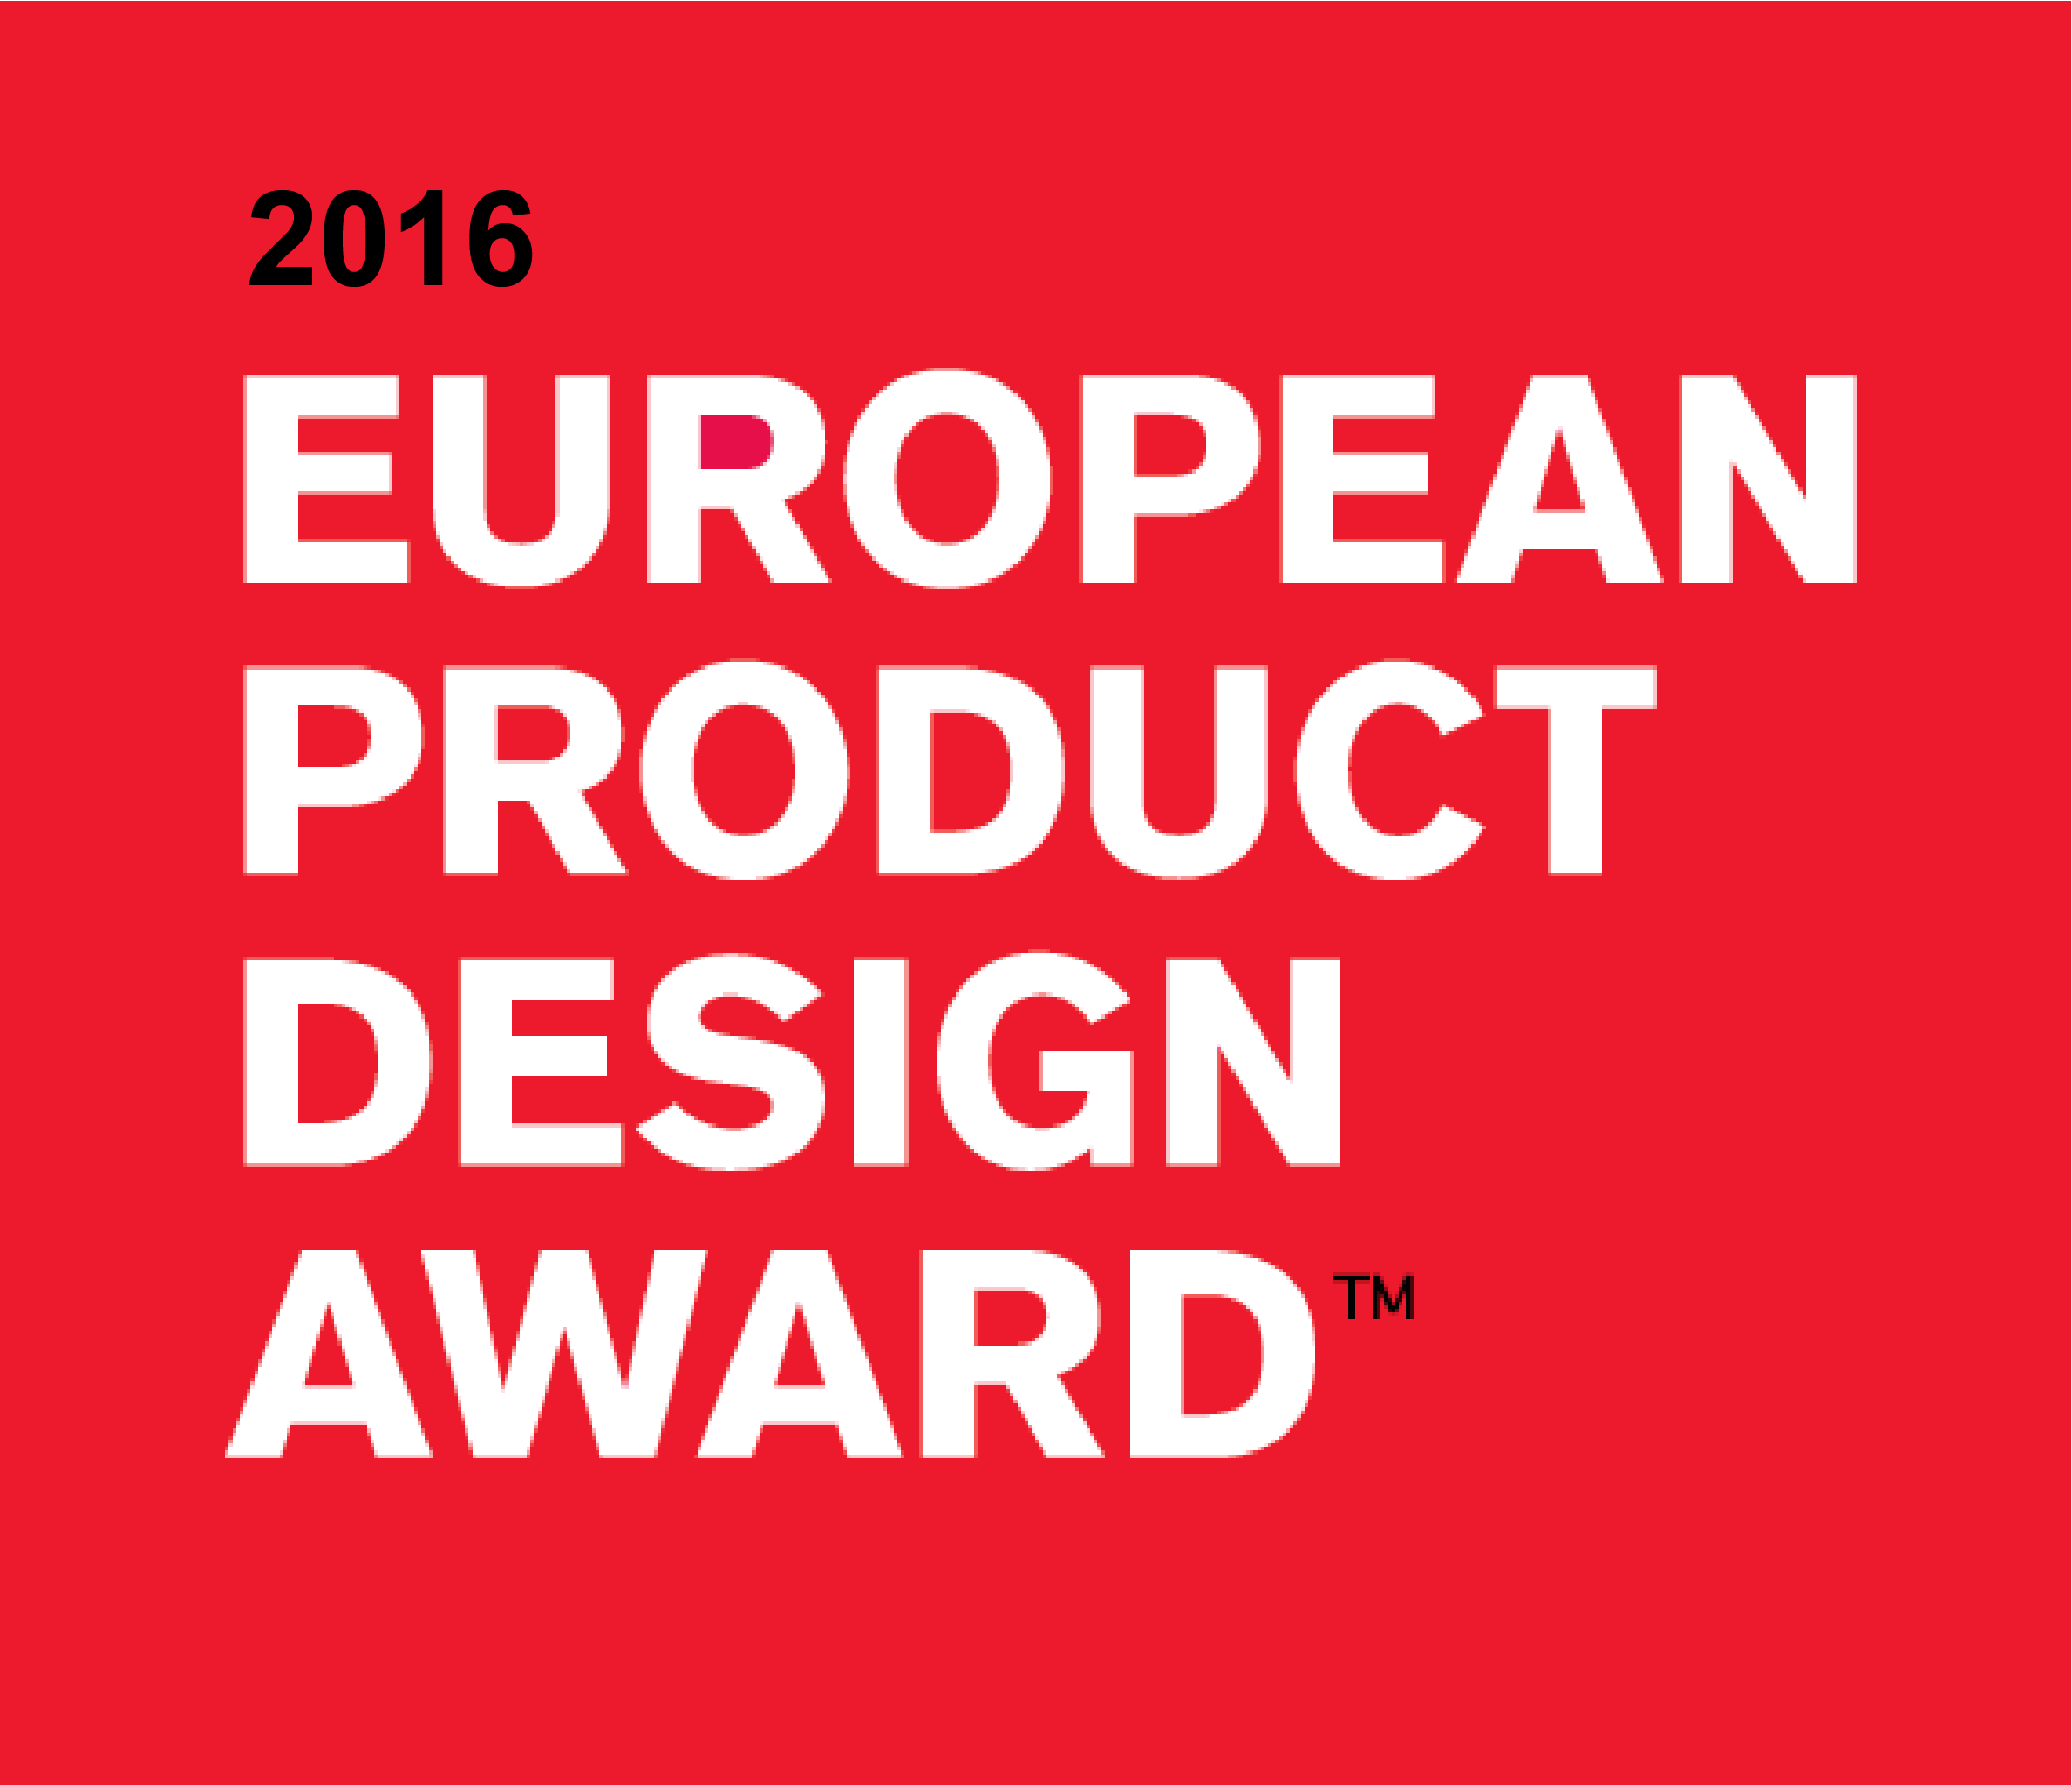 European Product Design Award 2016 logo